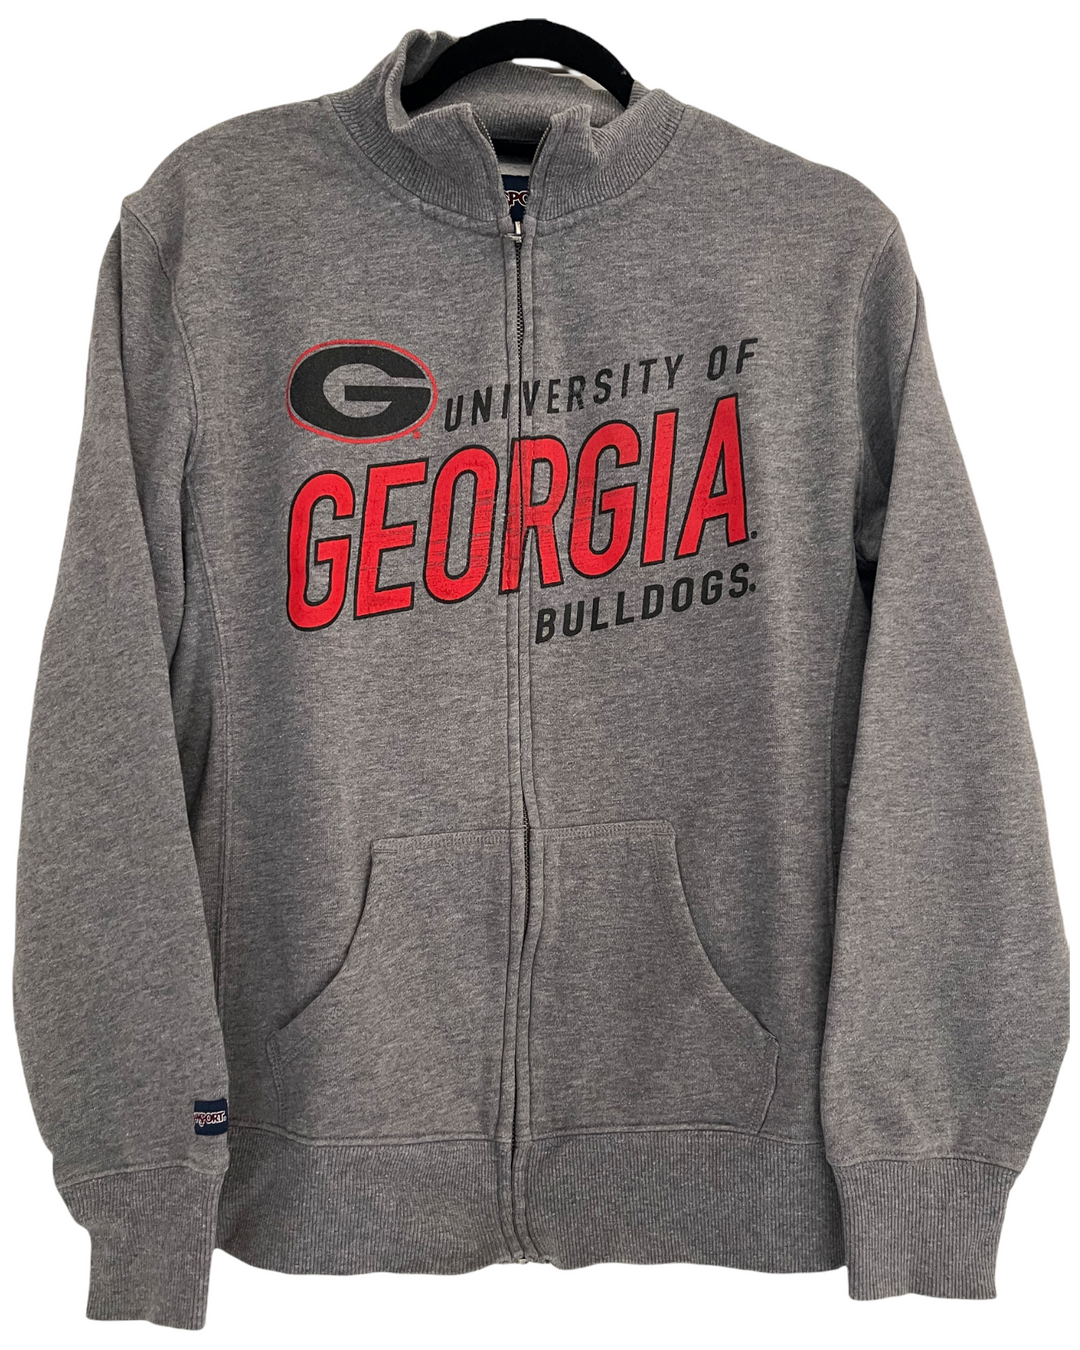 Georgia Vintage Zip Up Sweatshirt